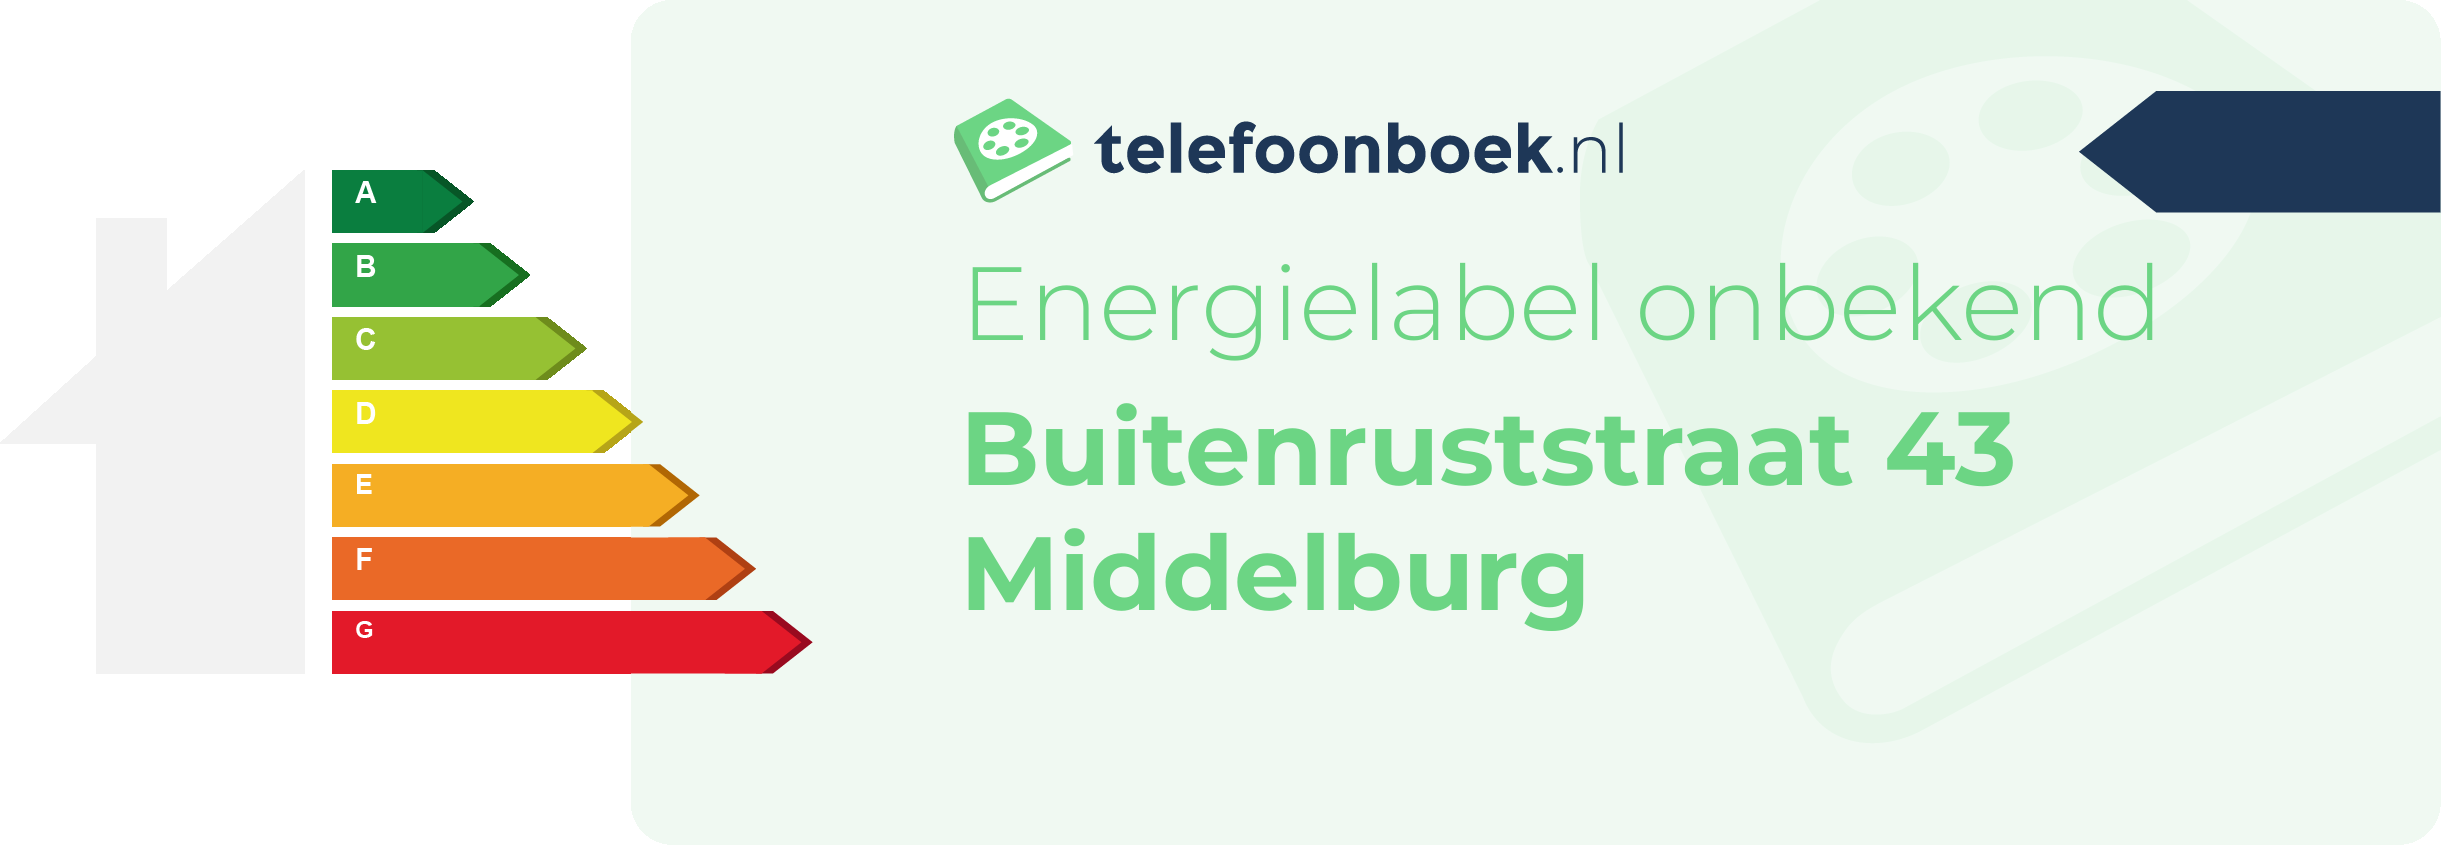 Energielabel Buitenruststraat 43 Middelburg